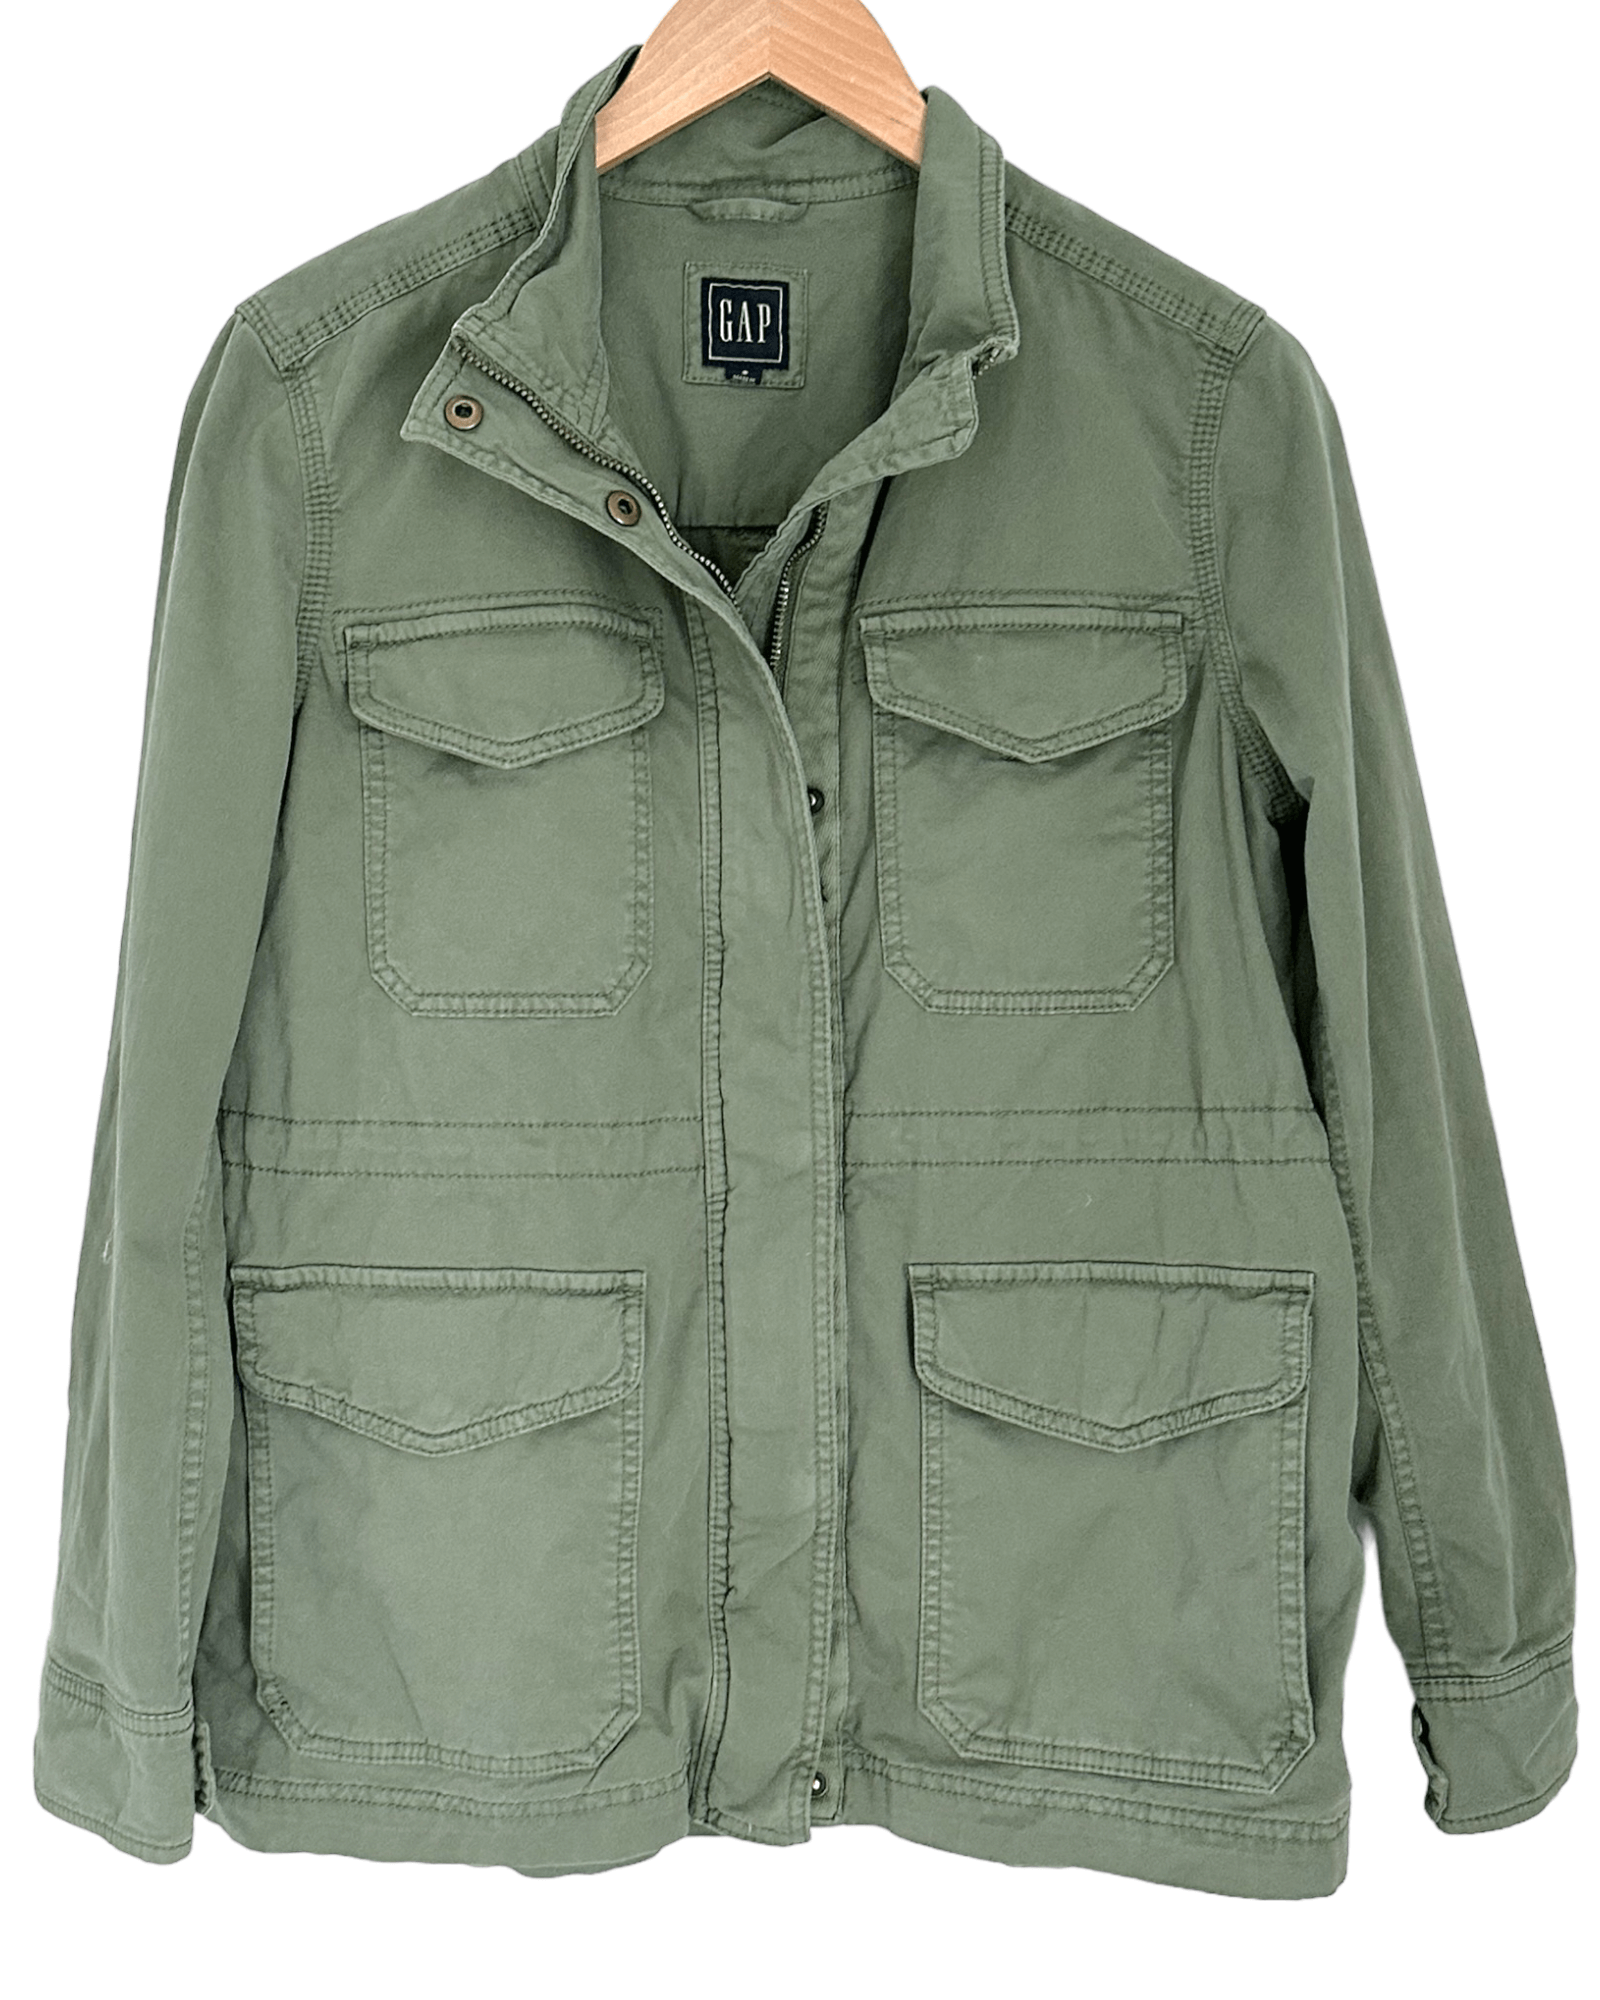 Soft Autumn GAP olive green utility jacket